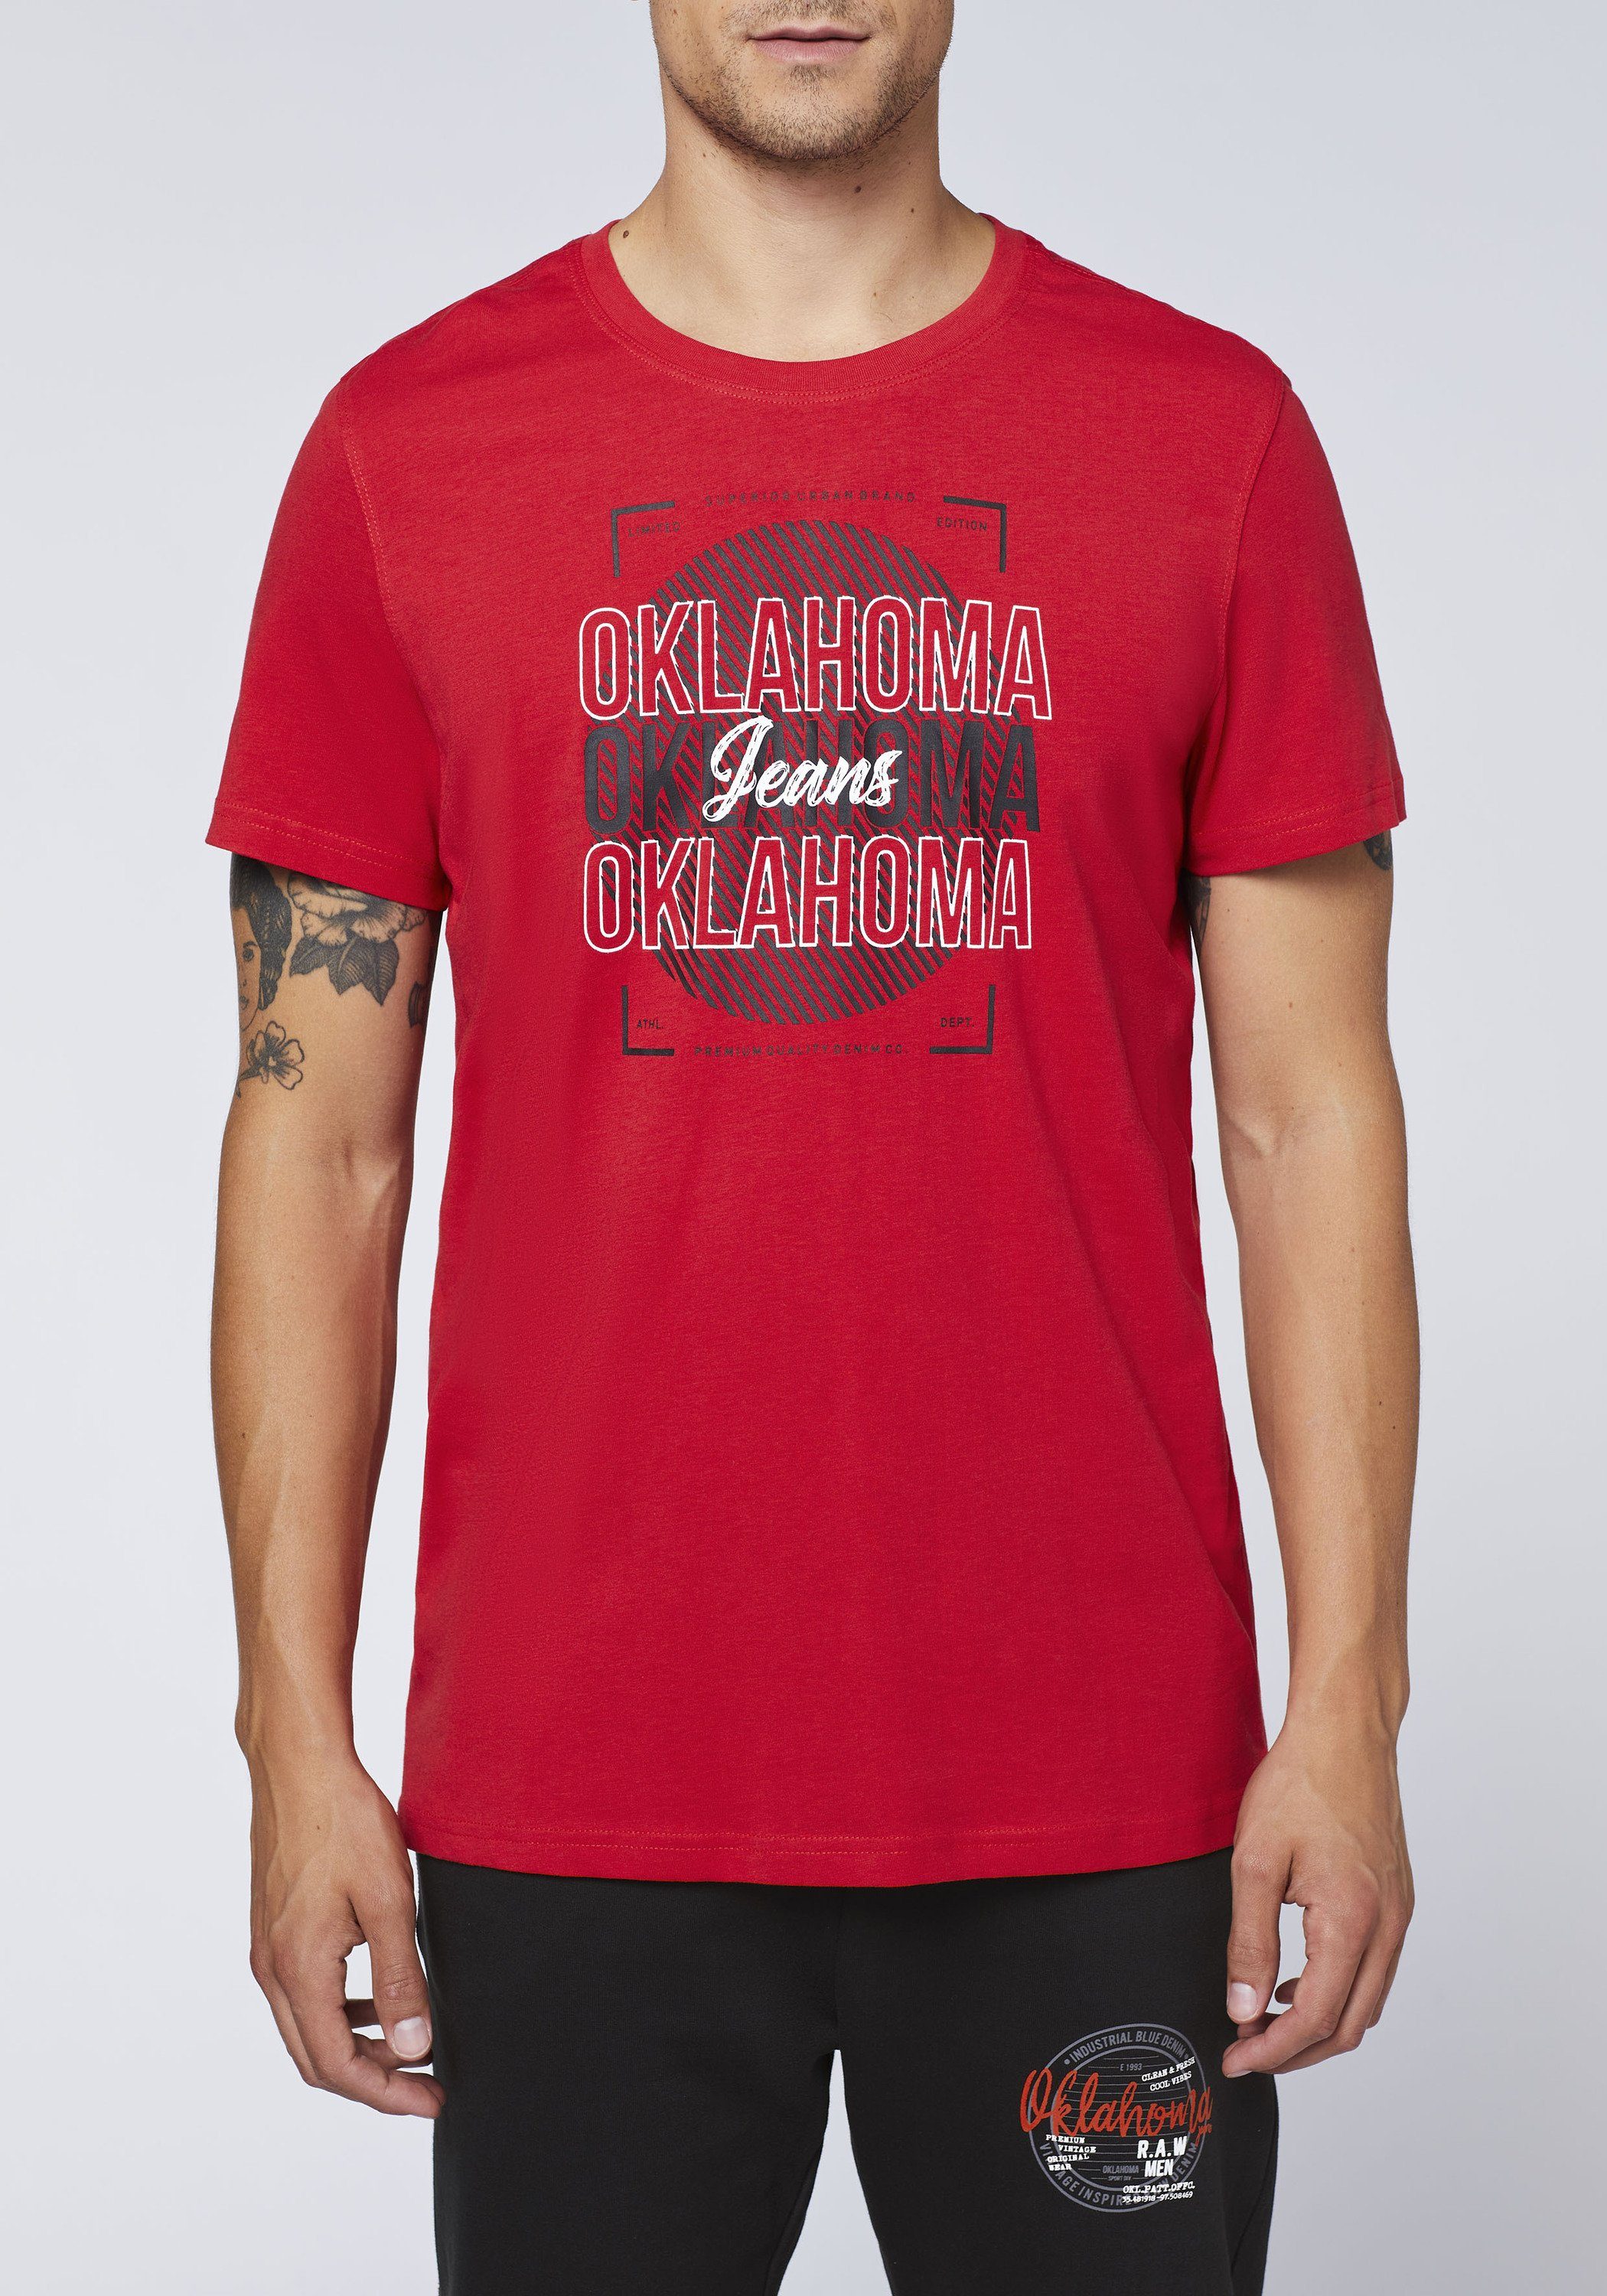 Pepper im Print-Shirt Jeans Label-Look 19-1557 neuen Oklahoma Chili